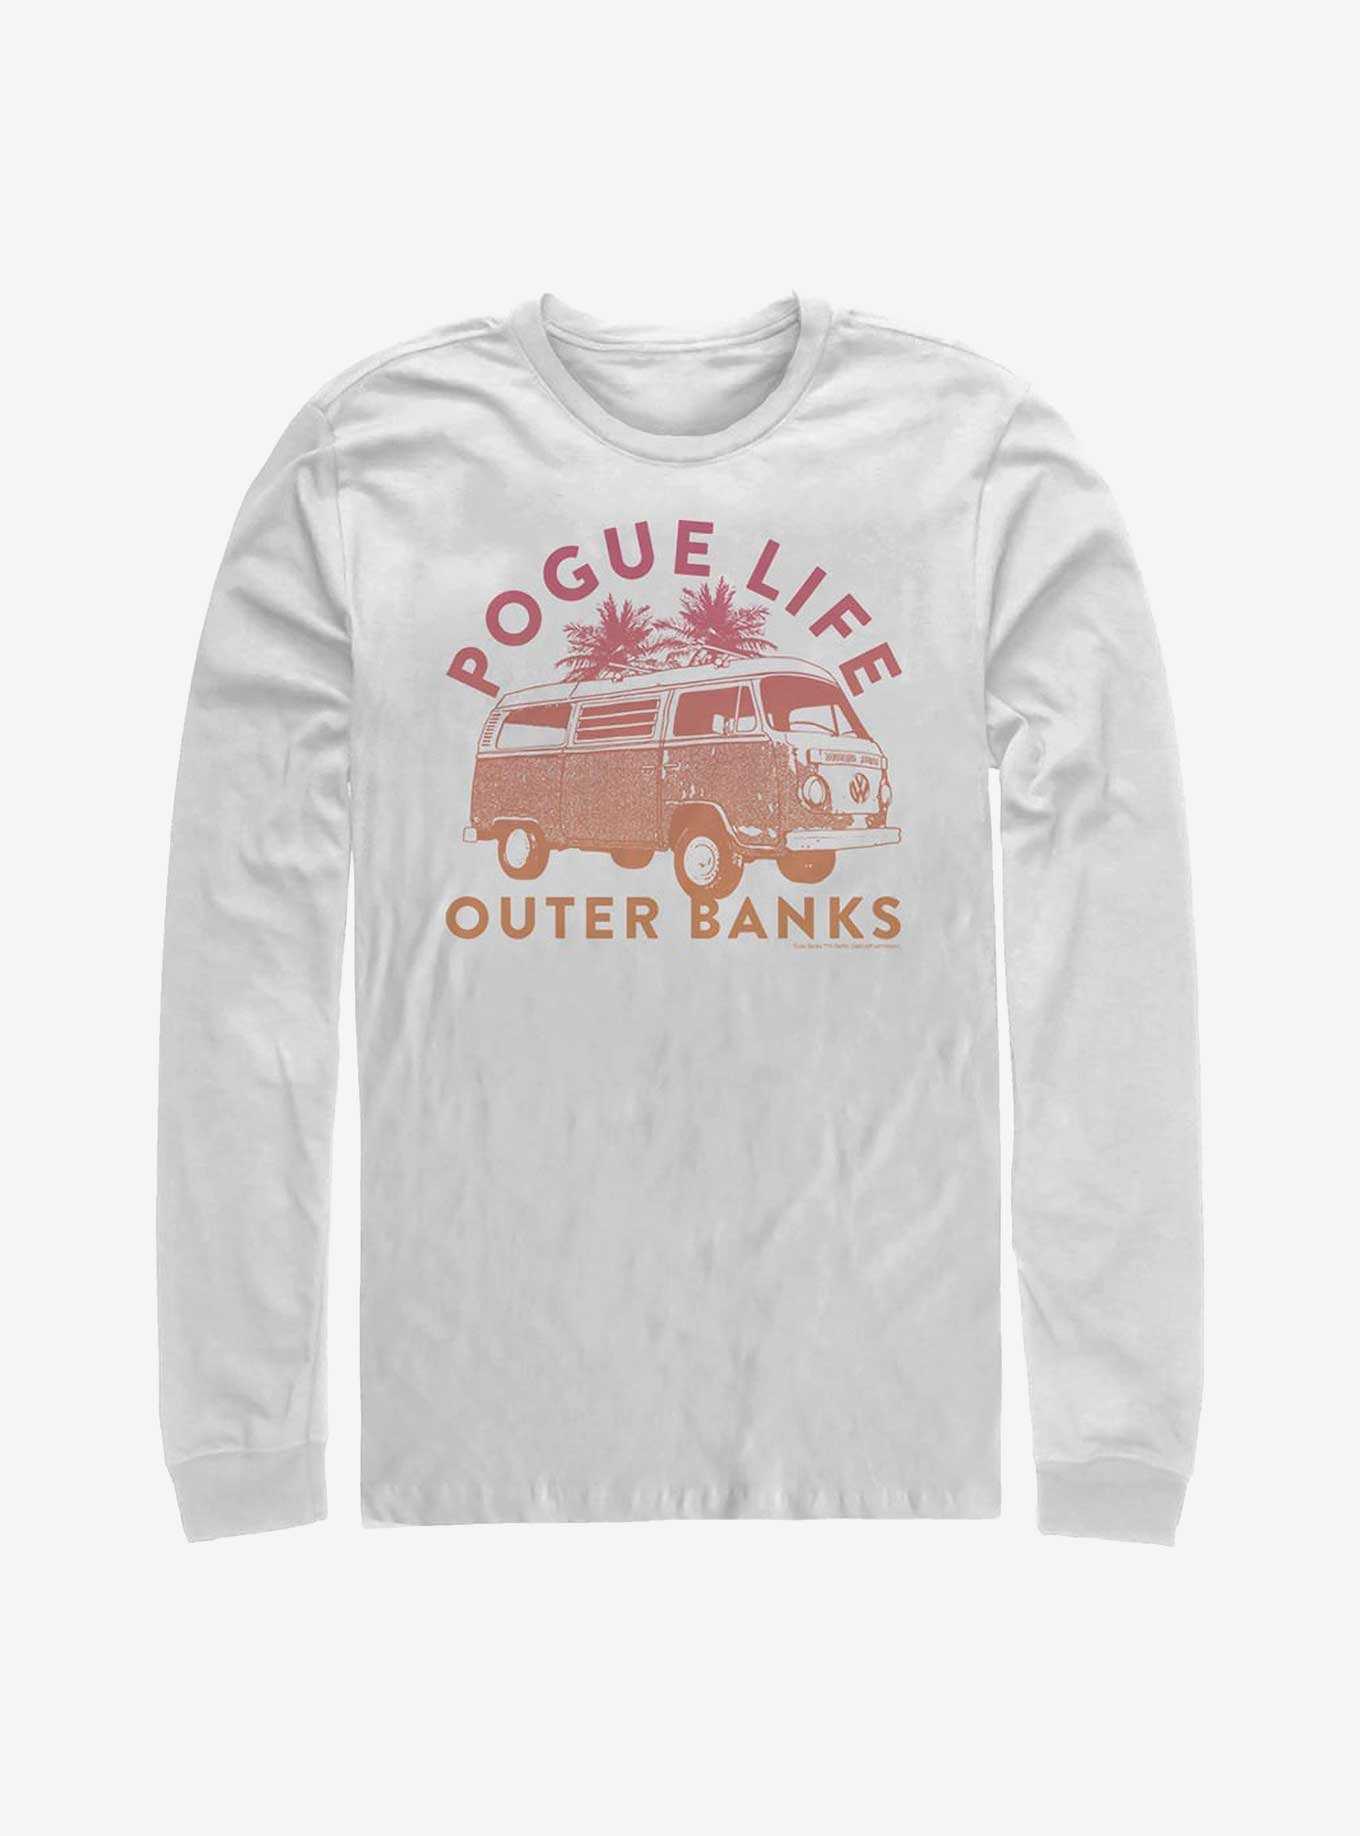 Outer Banks Pogue Life Long-Sleeve T-Shirt, , hi-res